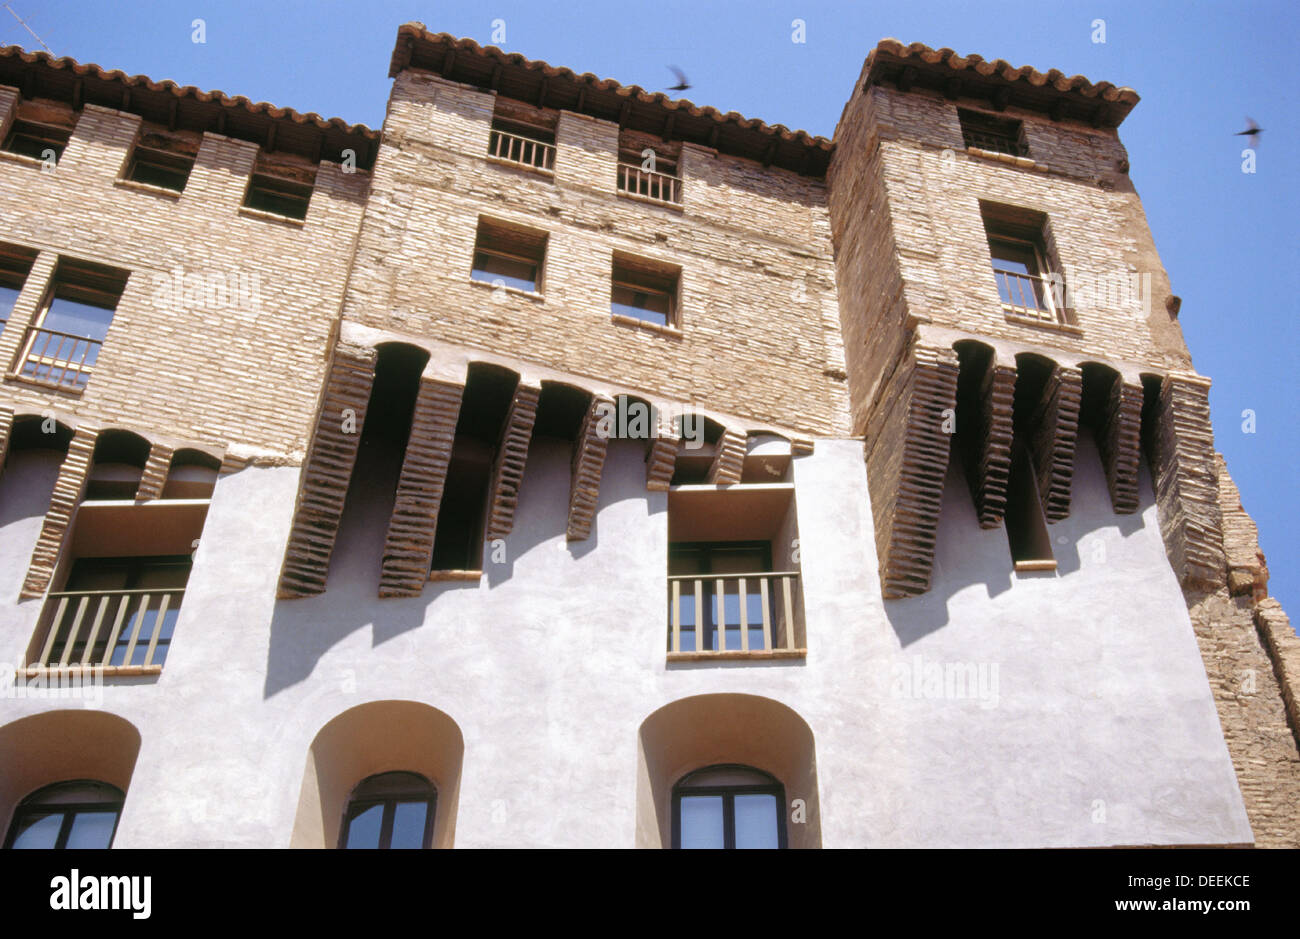 Casas Colgadas (Hanging Houses). Tarazona. Zaragoza province. Aragón. Spain  Stock Photo - Alamy